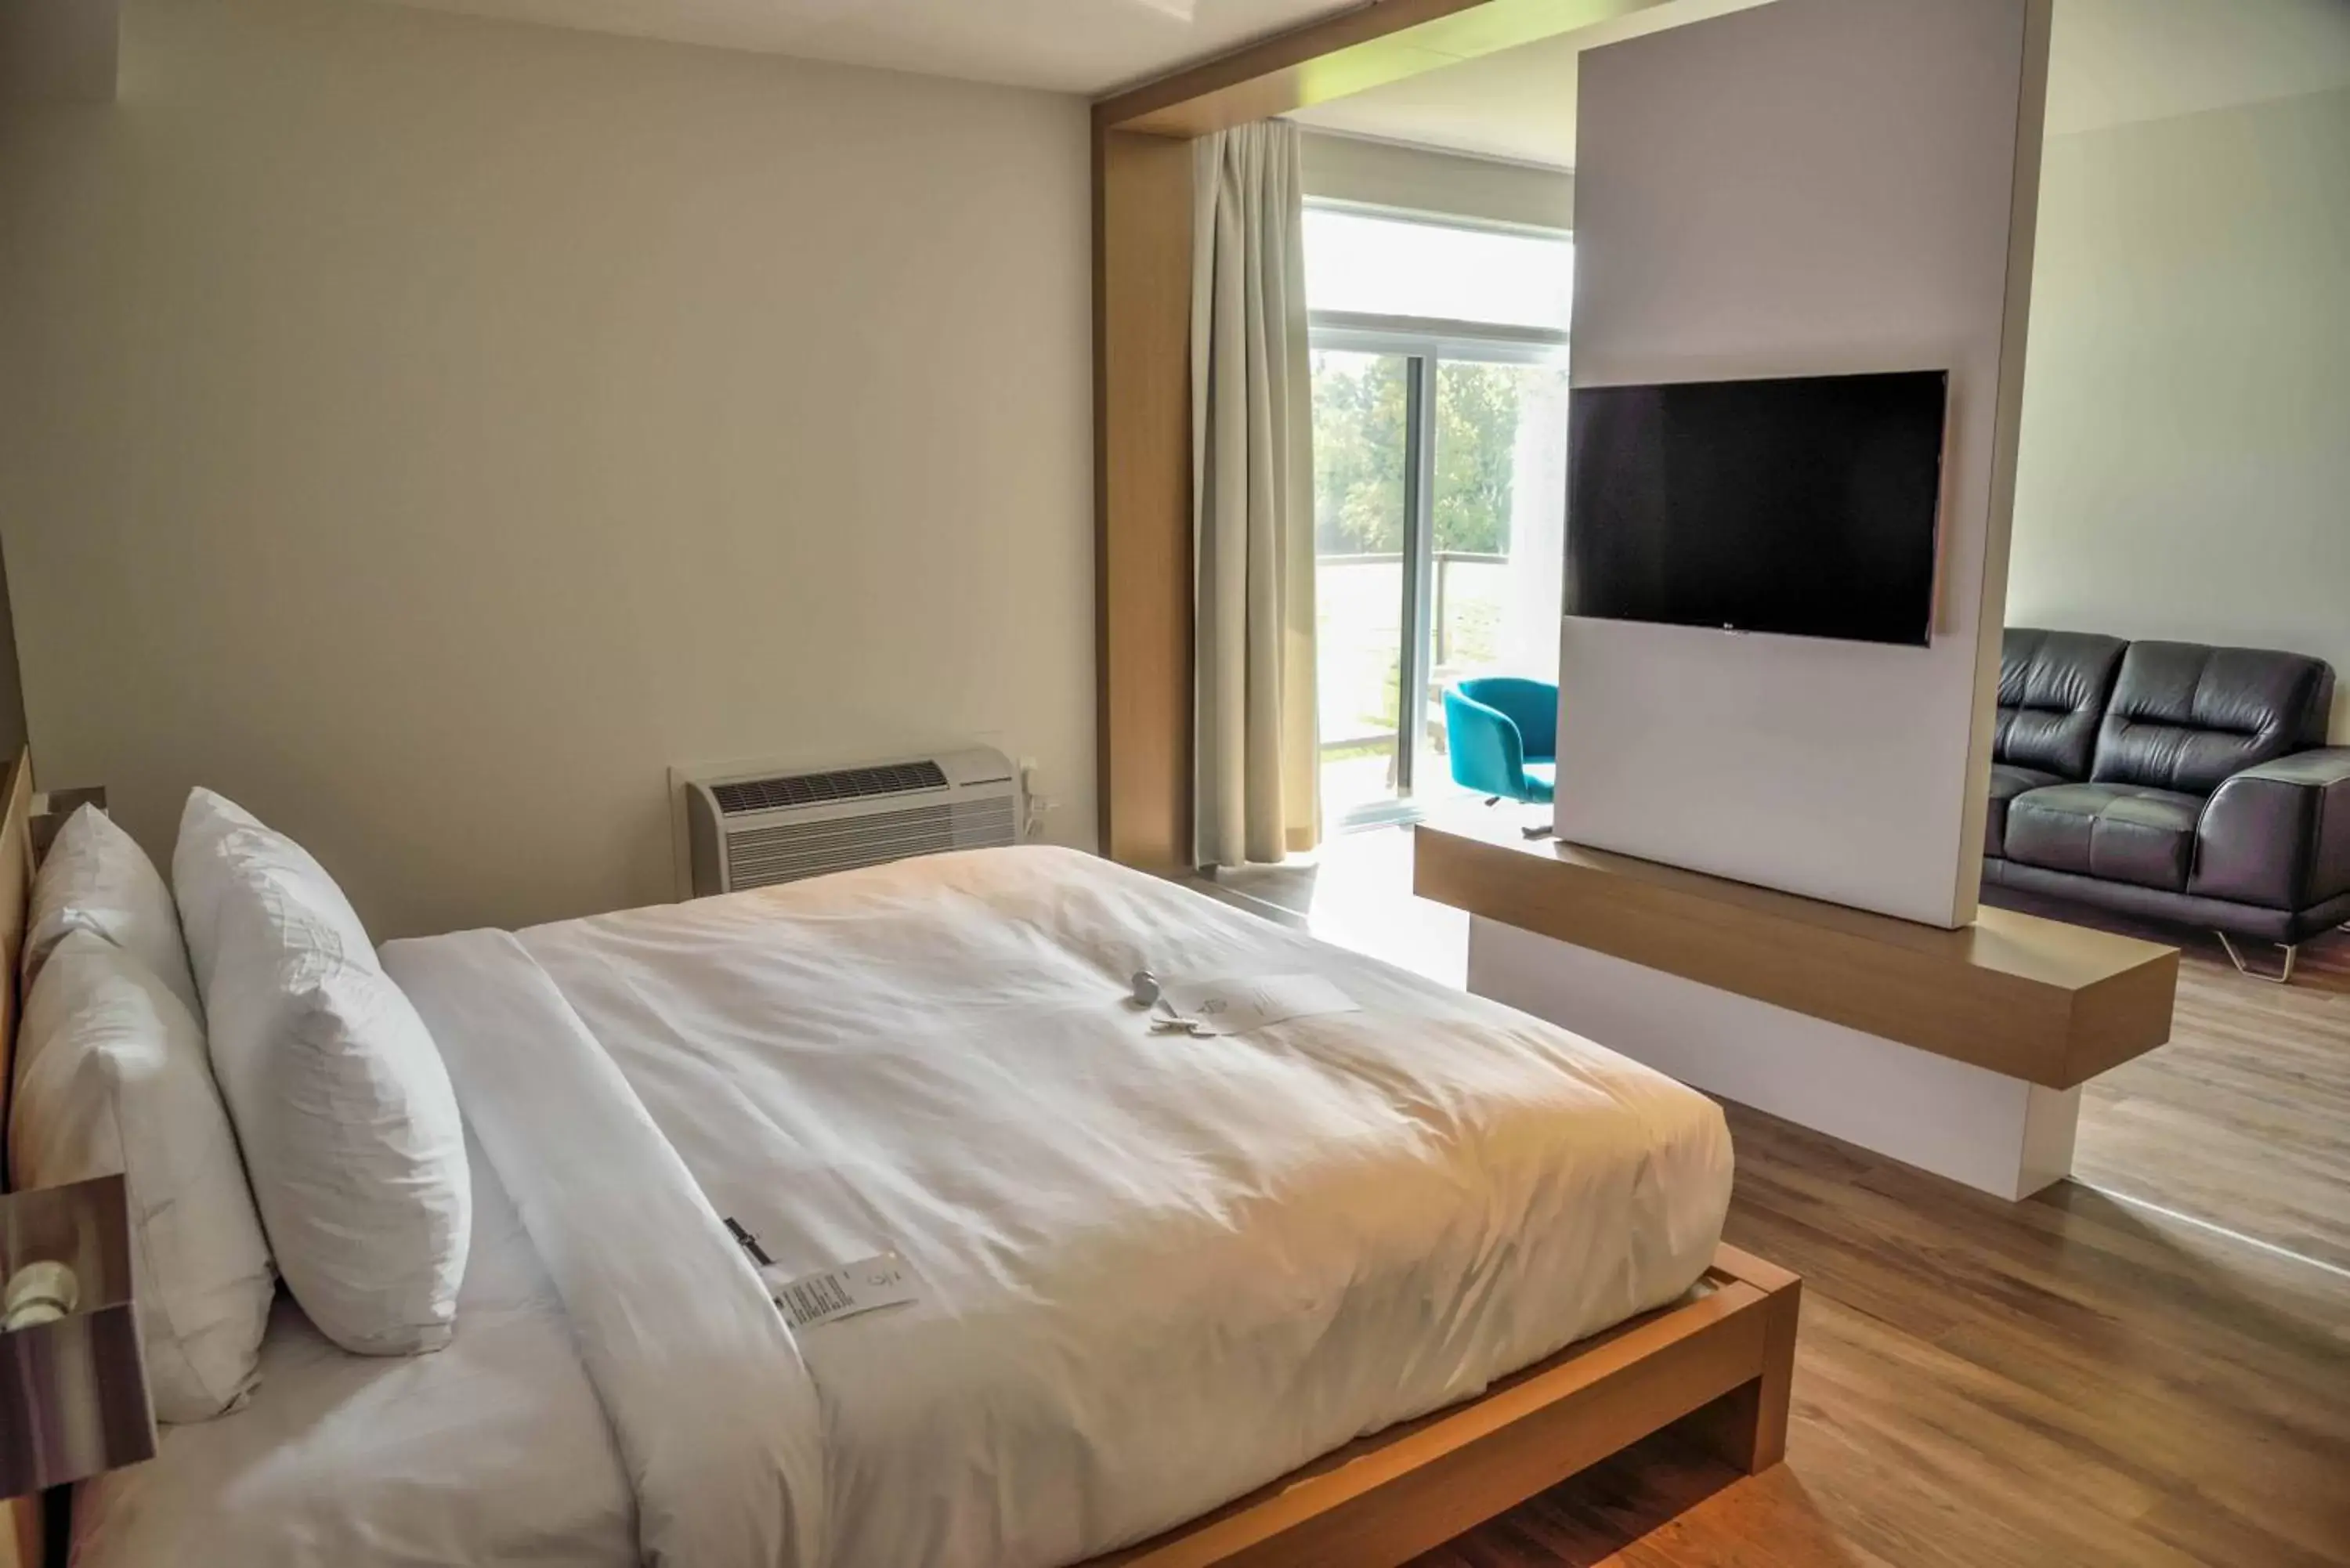 Bed, Room Photo in La Cache du Golf